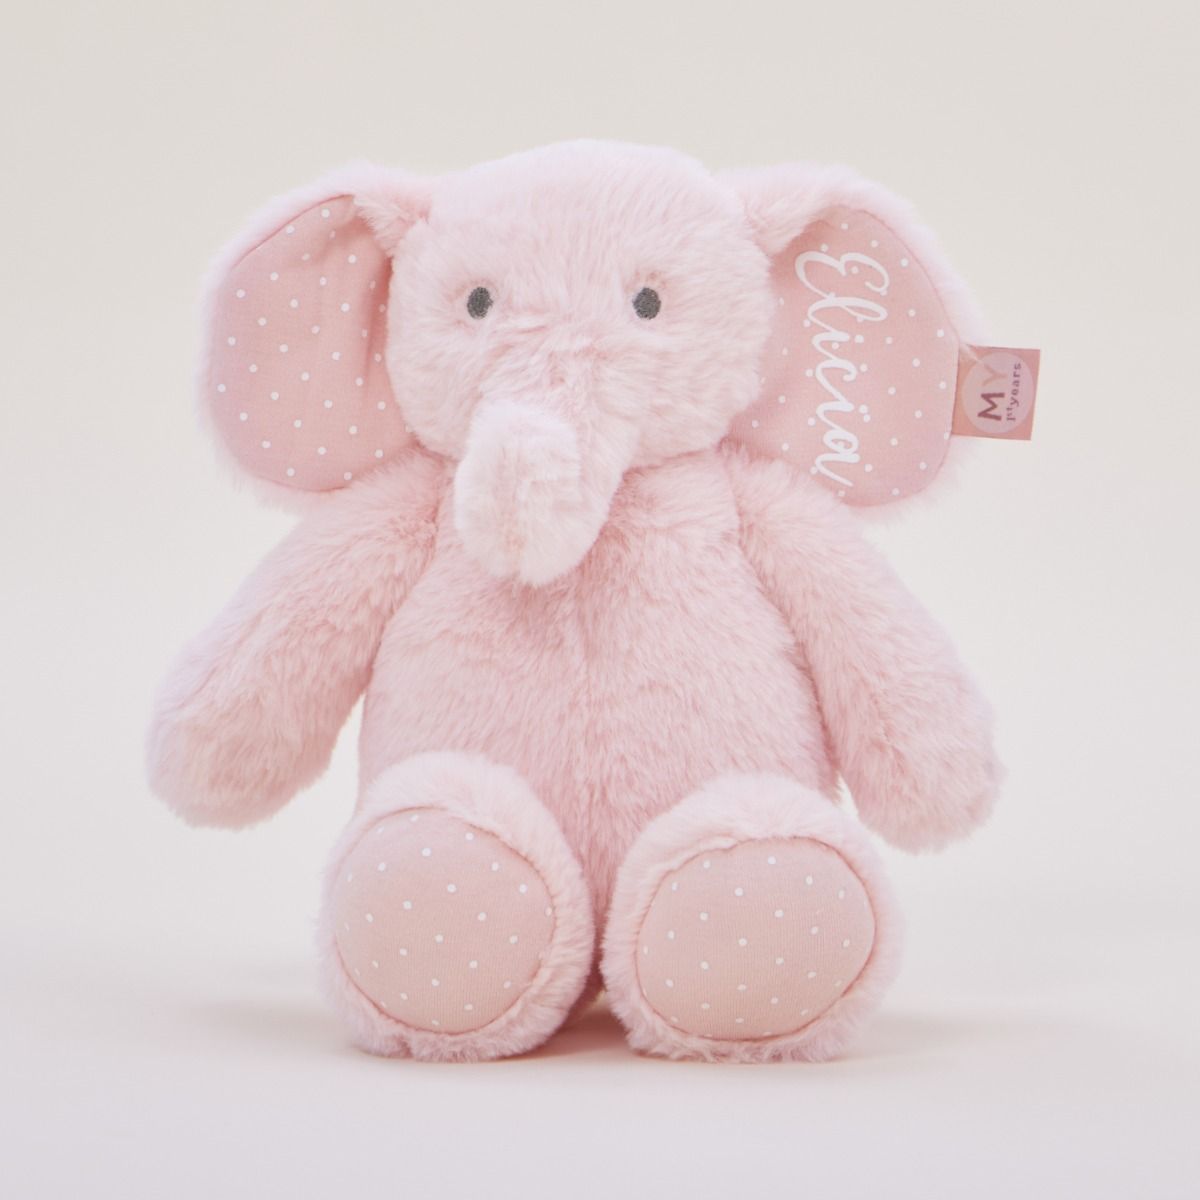 Personalised Pink Elephant Soft Toy